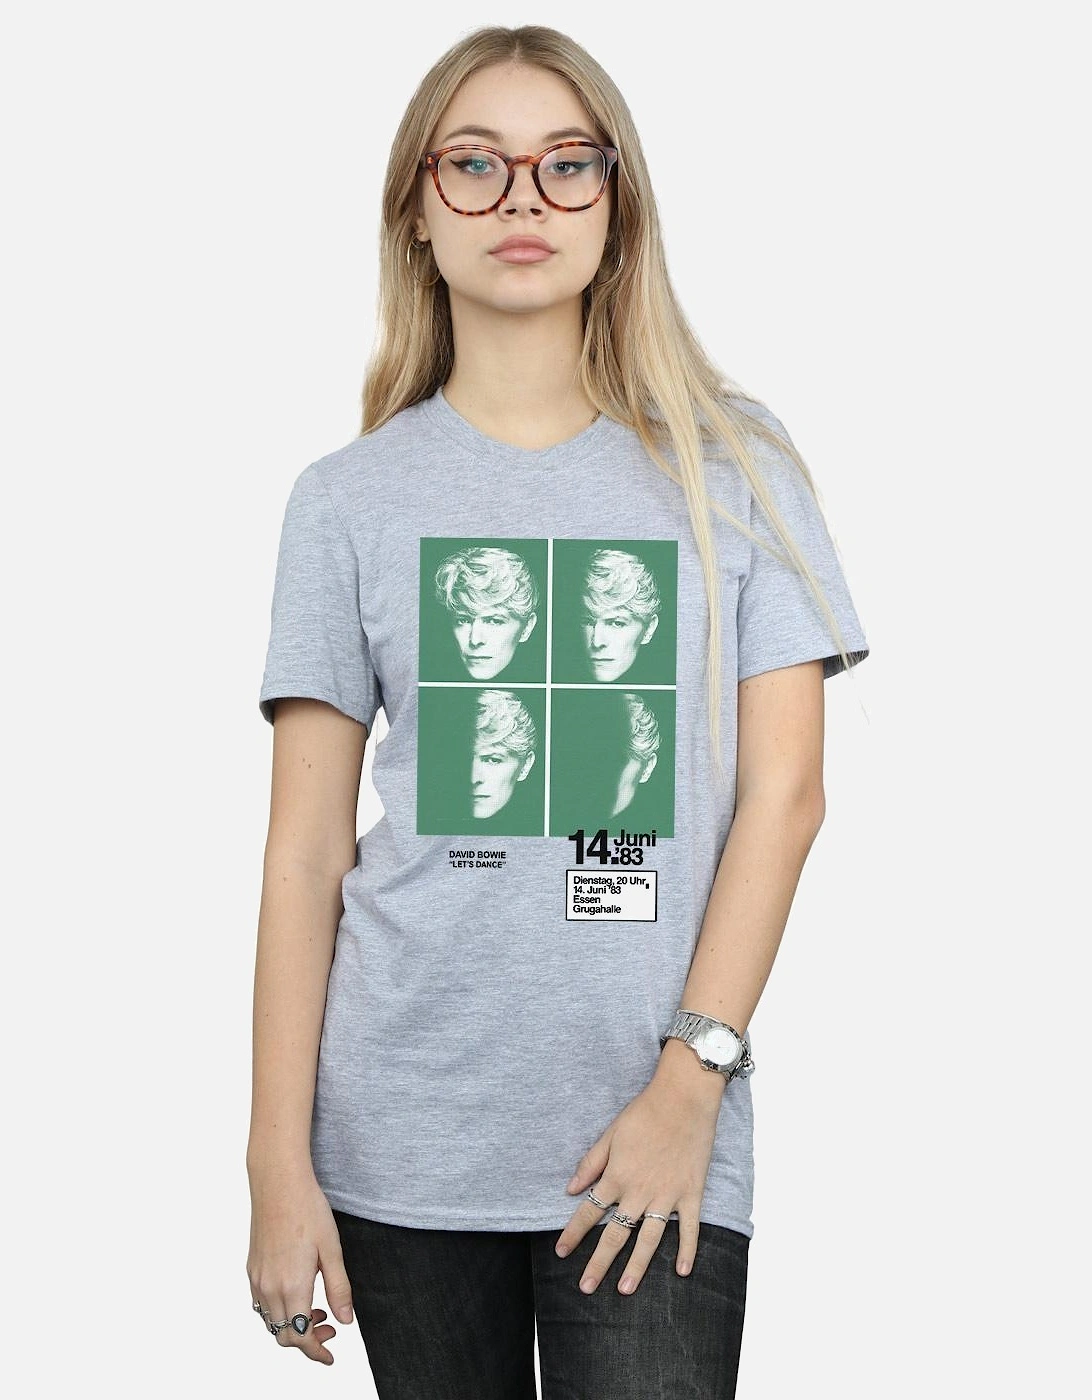 Womens/Ladies 1983 Concert Poster Cotton Boyfriend T-Shirt